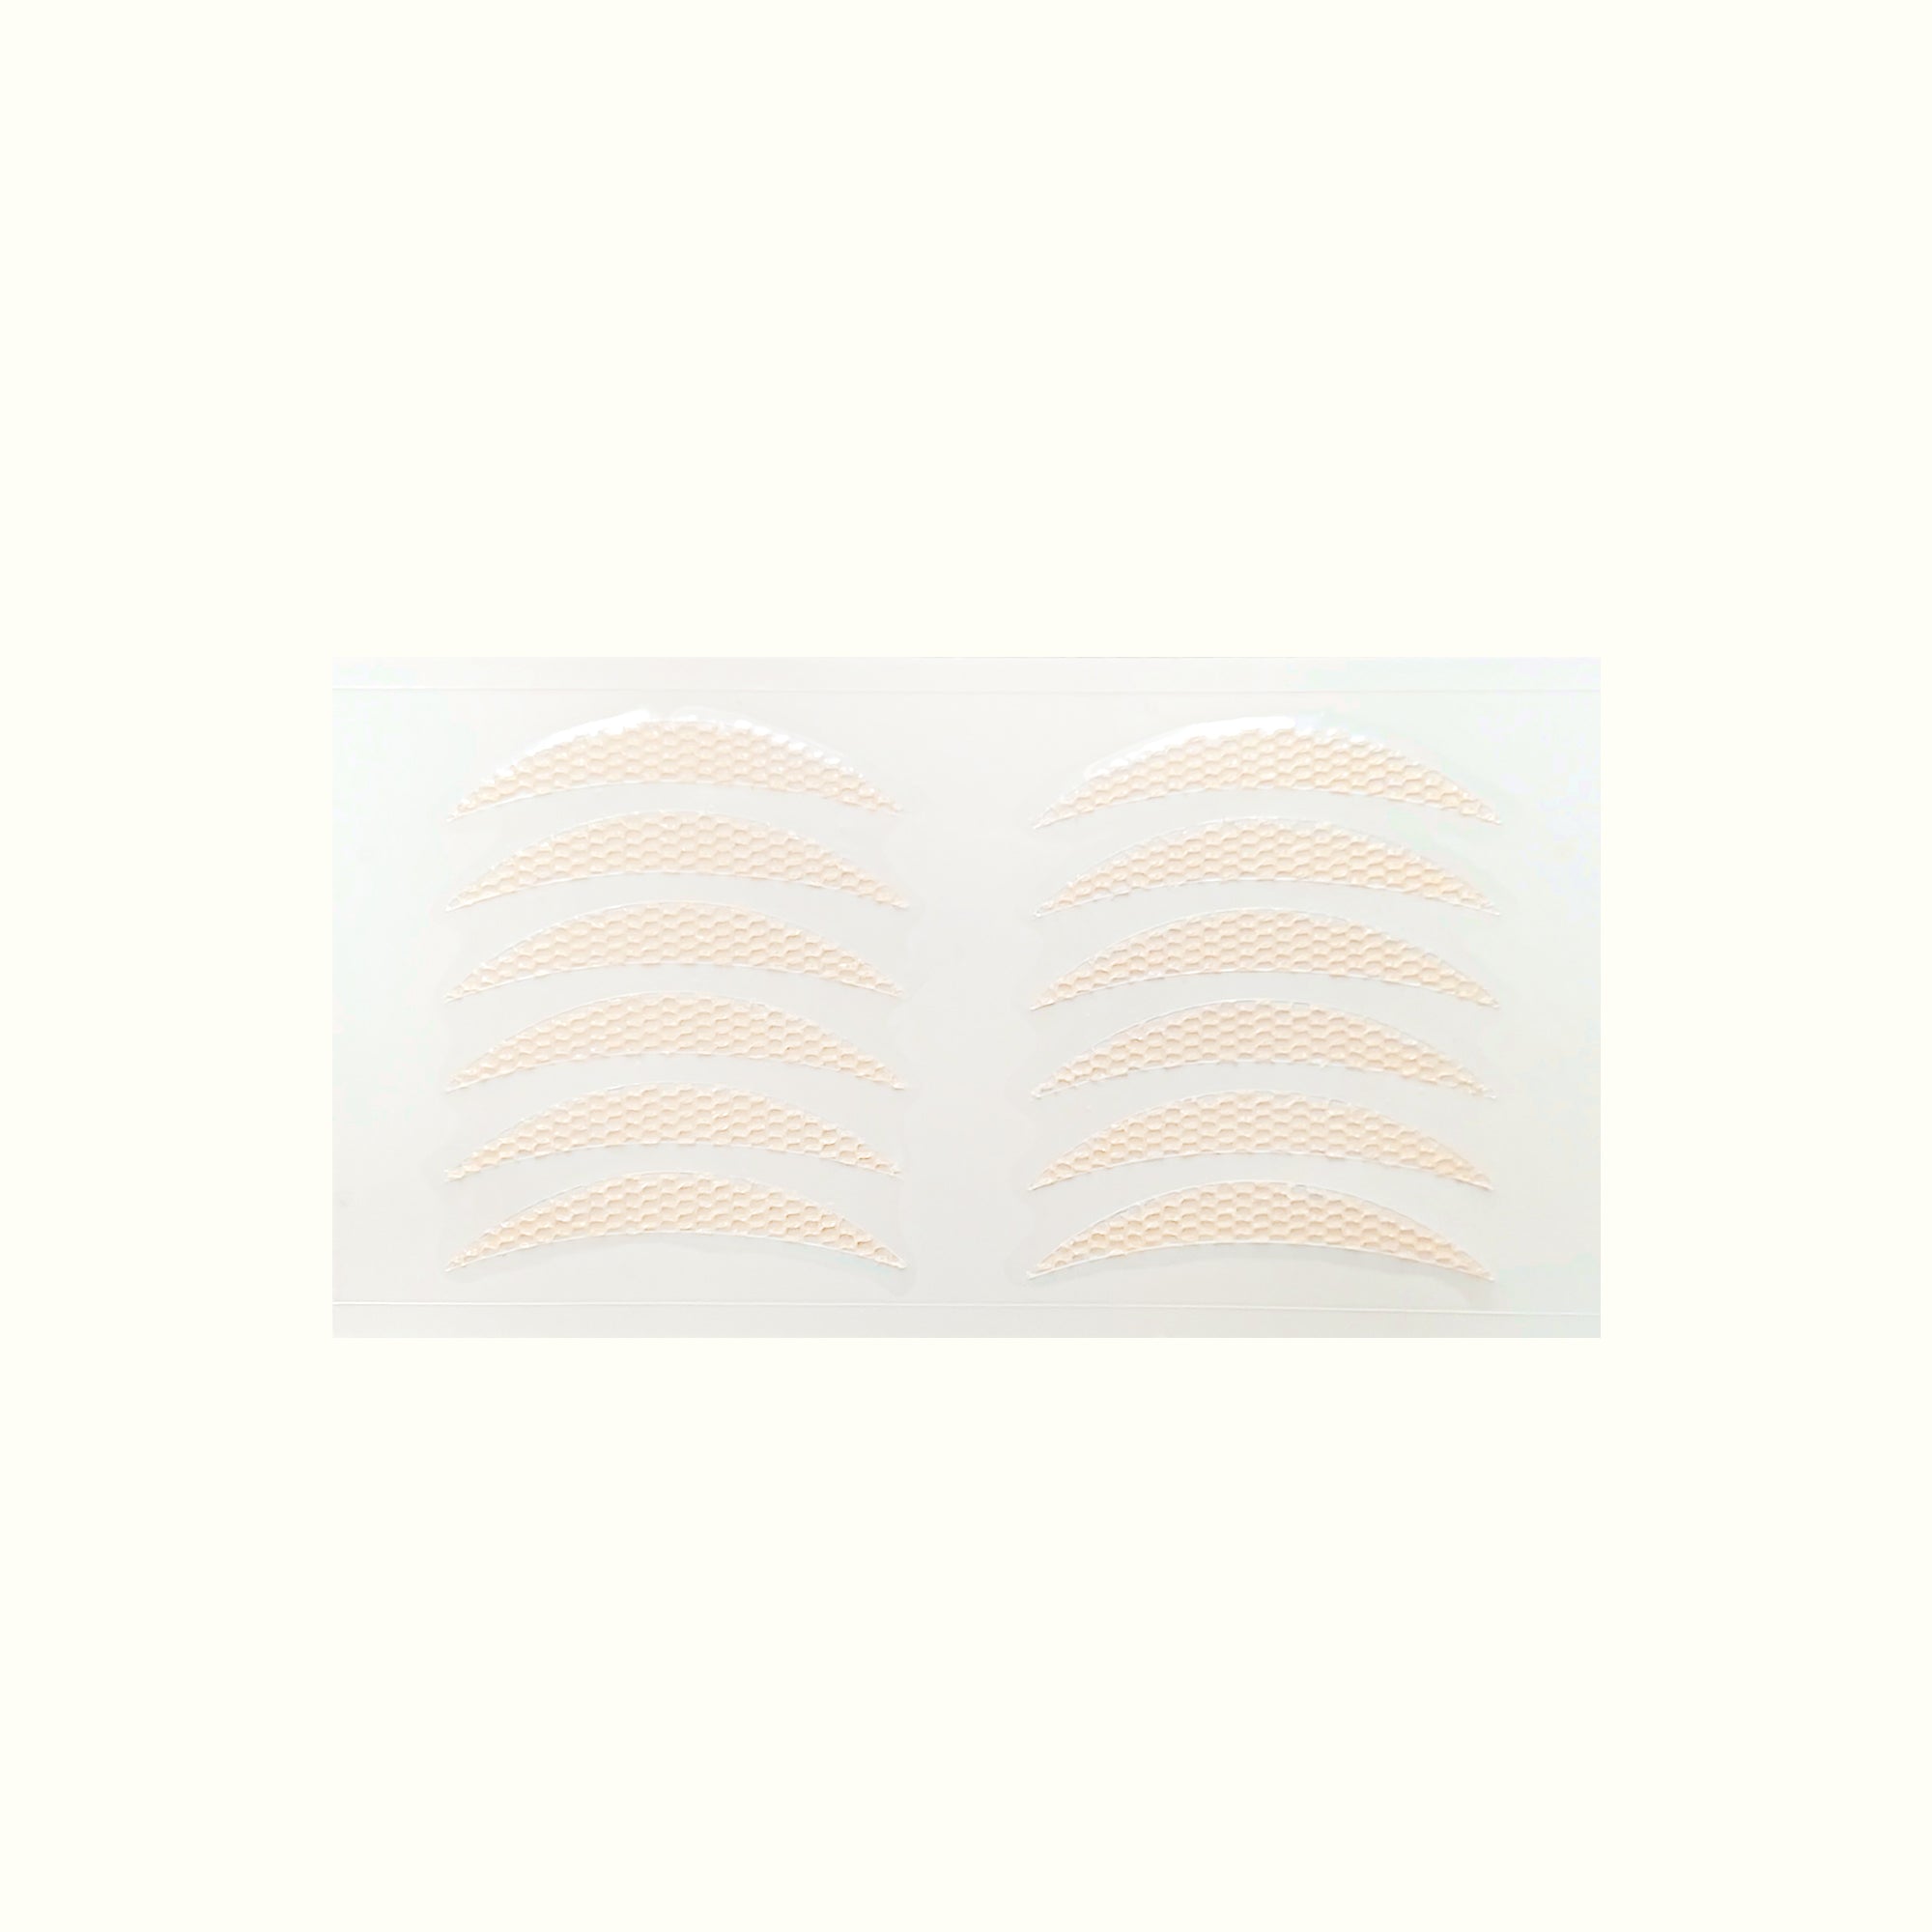 MUAQ Nylon Lace Eyelid Tape - Medium